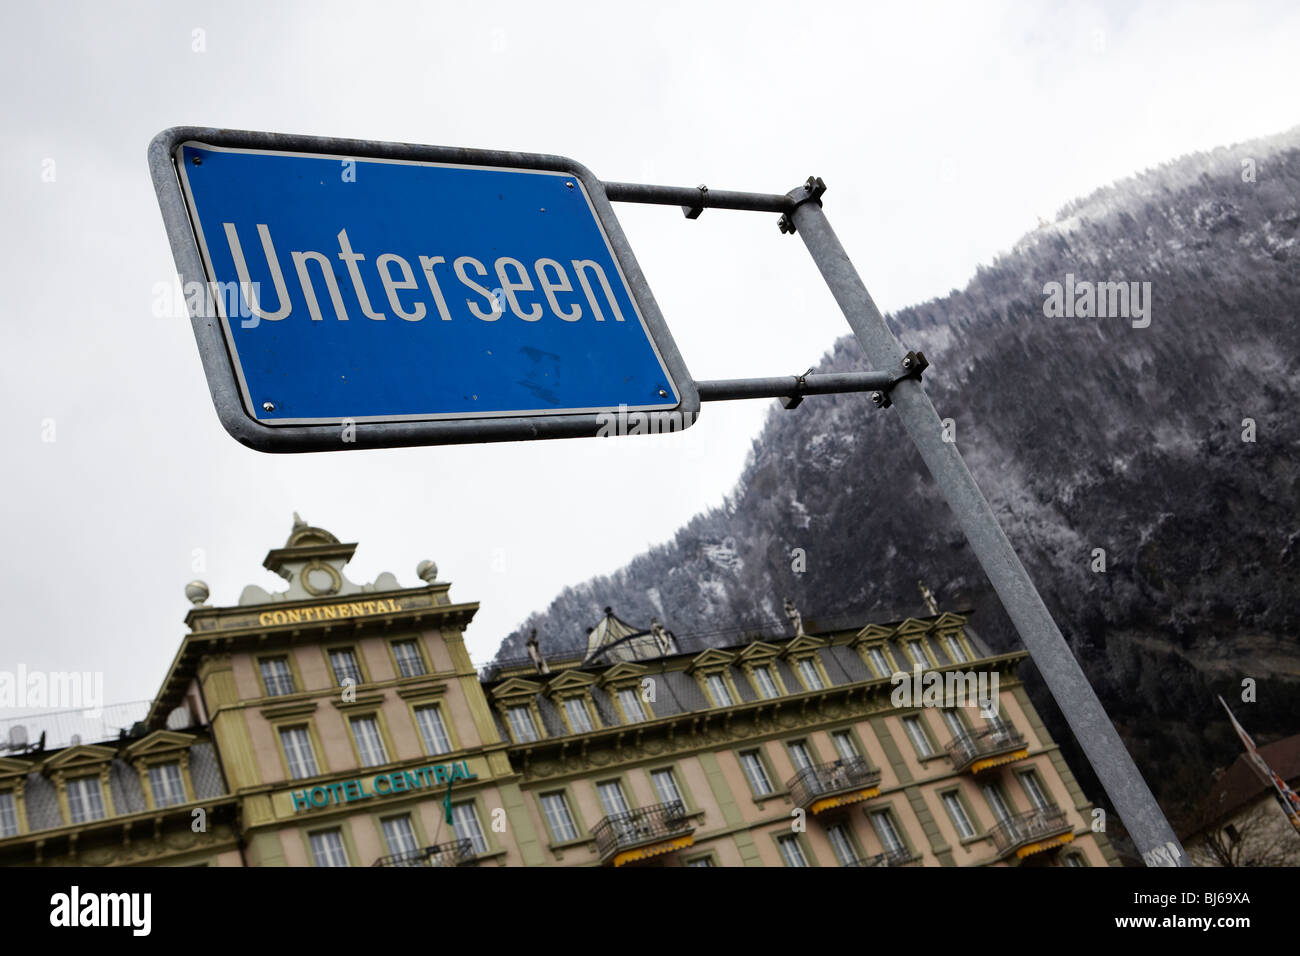 Unterseen sign, Interlaken, Switzerland Stock Photo